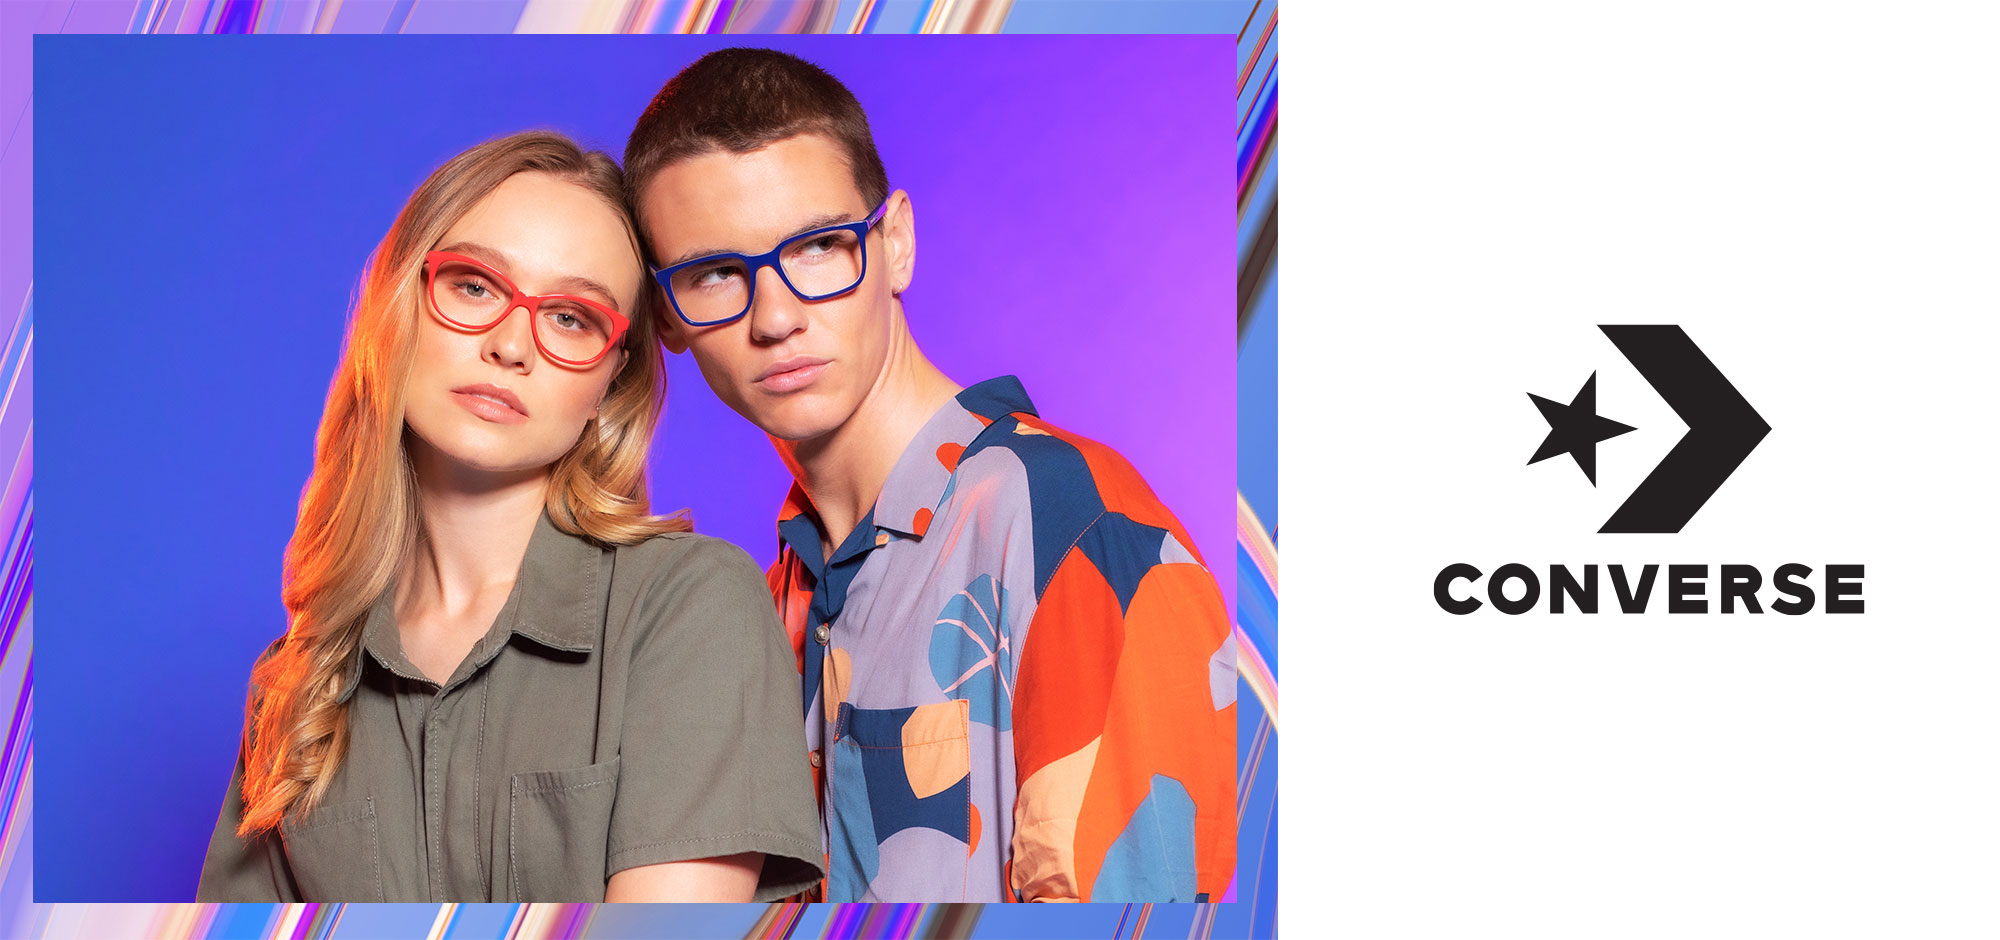 Audioptica on Twitter: "Las gafas Converse, creadas para mentes independientes, creativas y completan tu look effordless. #Audioptica #moda #eyewear https://t.co/SeNP61wtDc" / Twitter